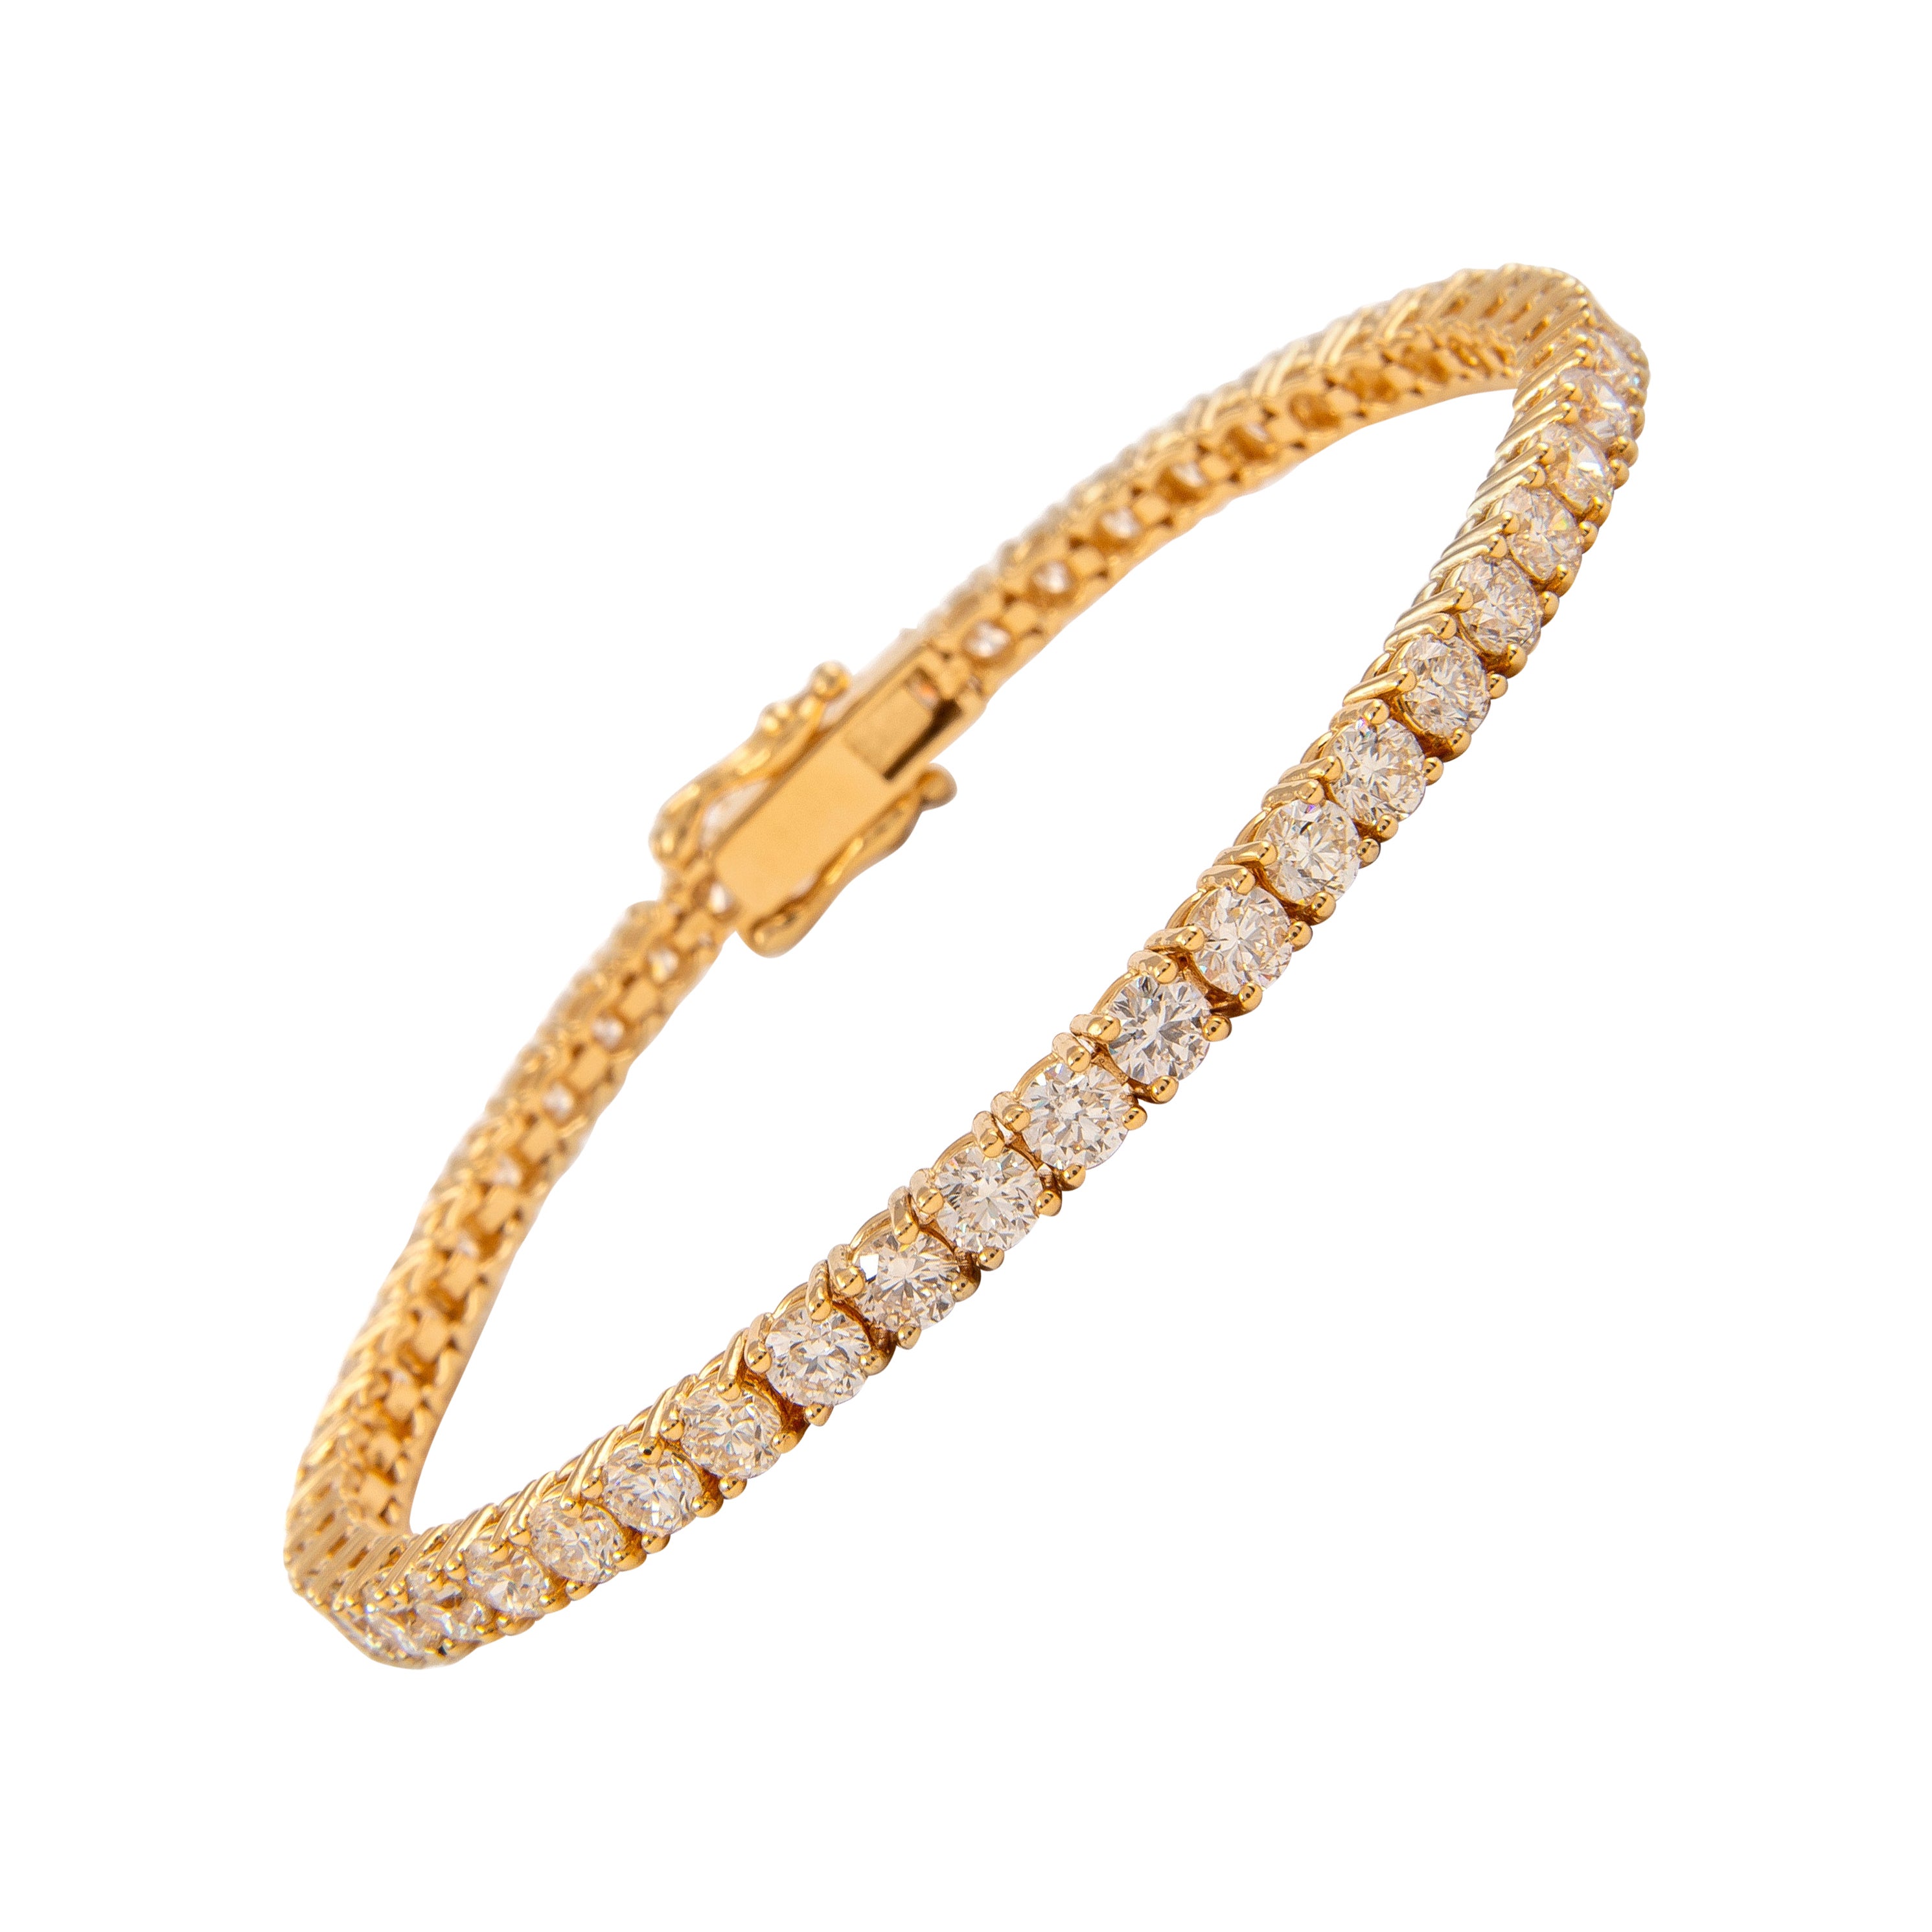 Alexander 8.78 Carats Diamond Tennis Bracelet 18-Karat Yellow Gold For Sale